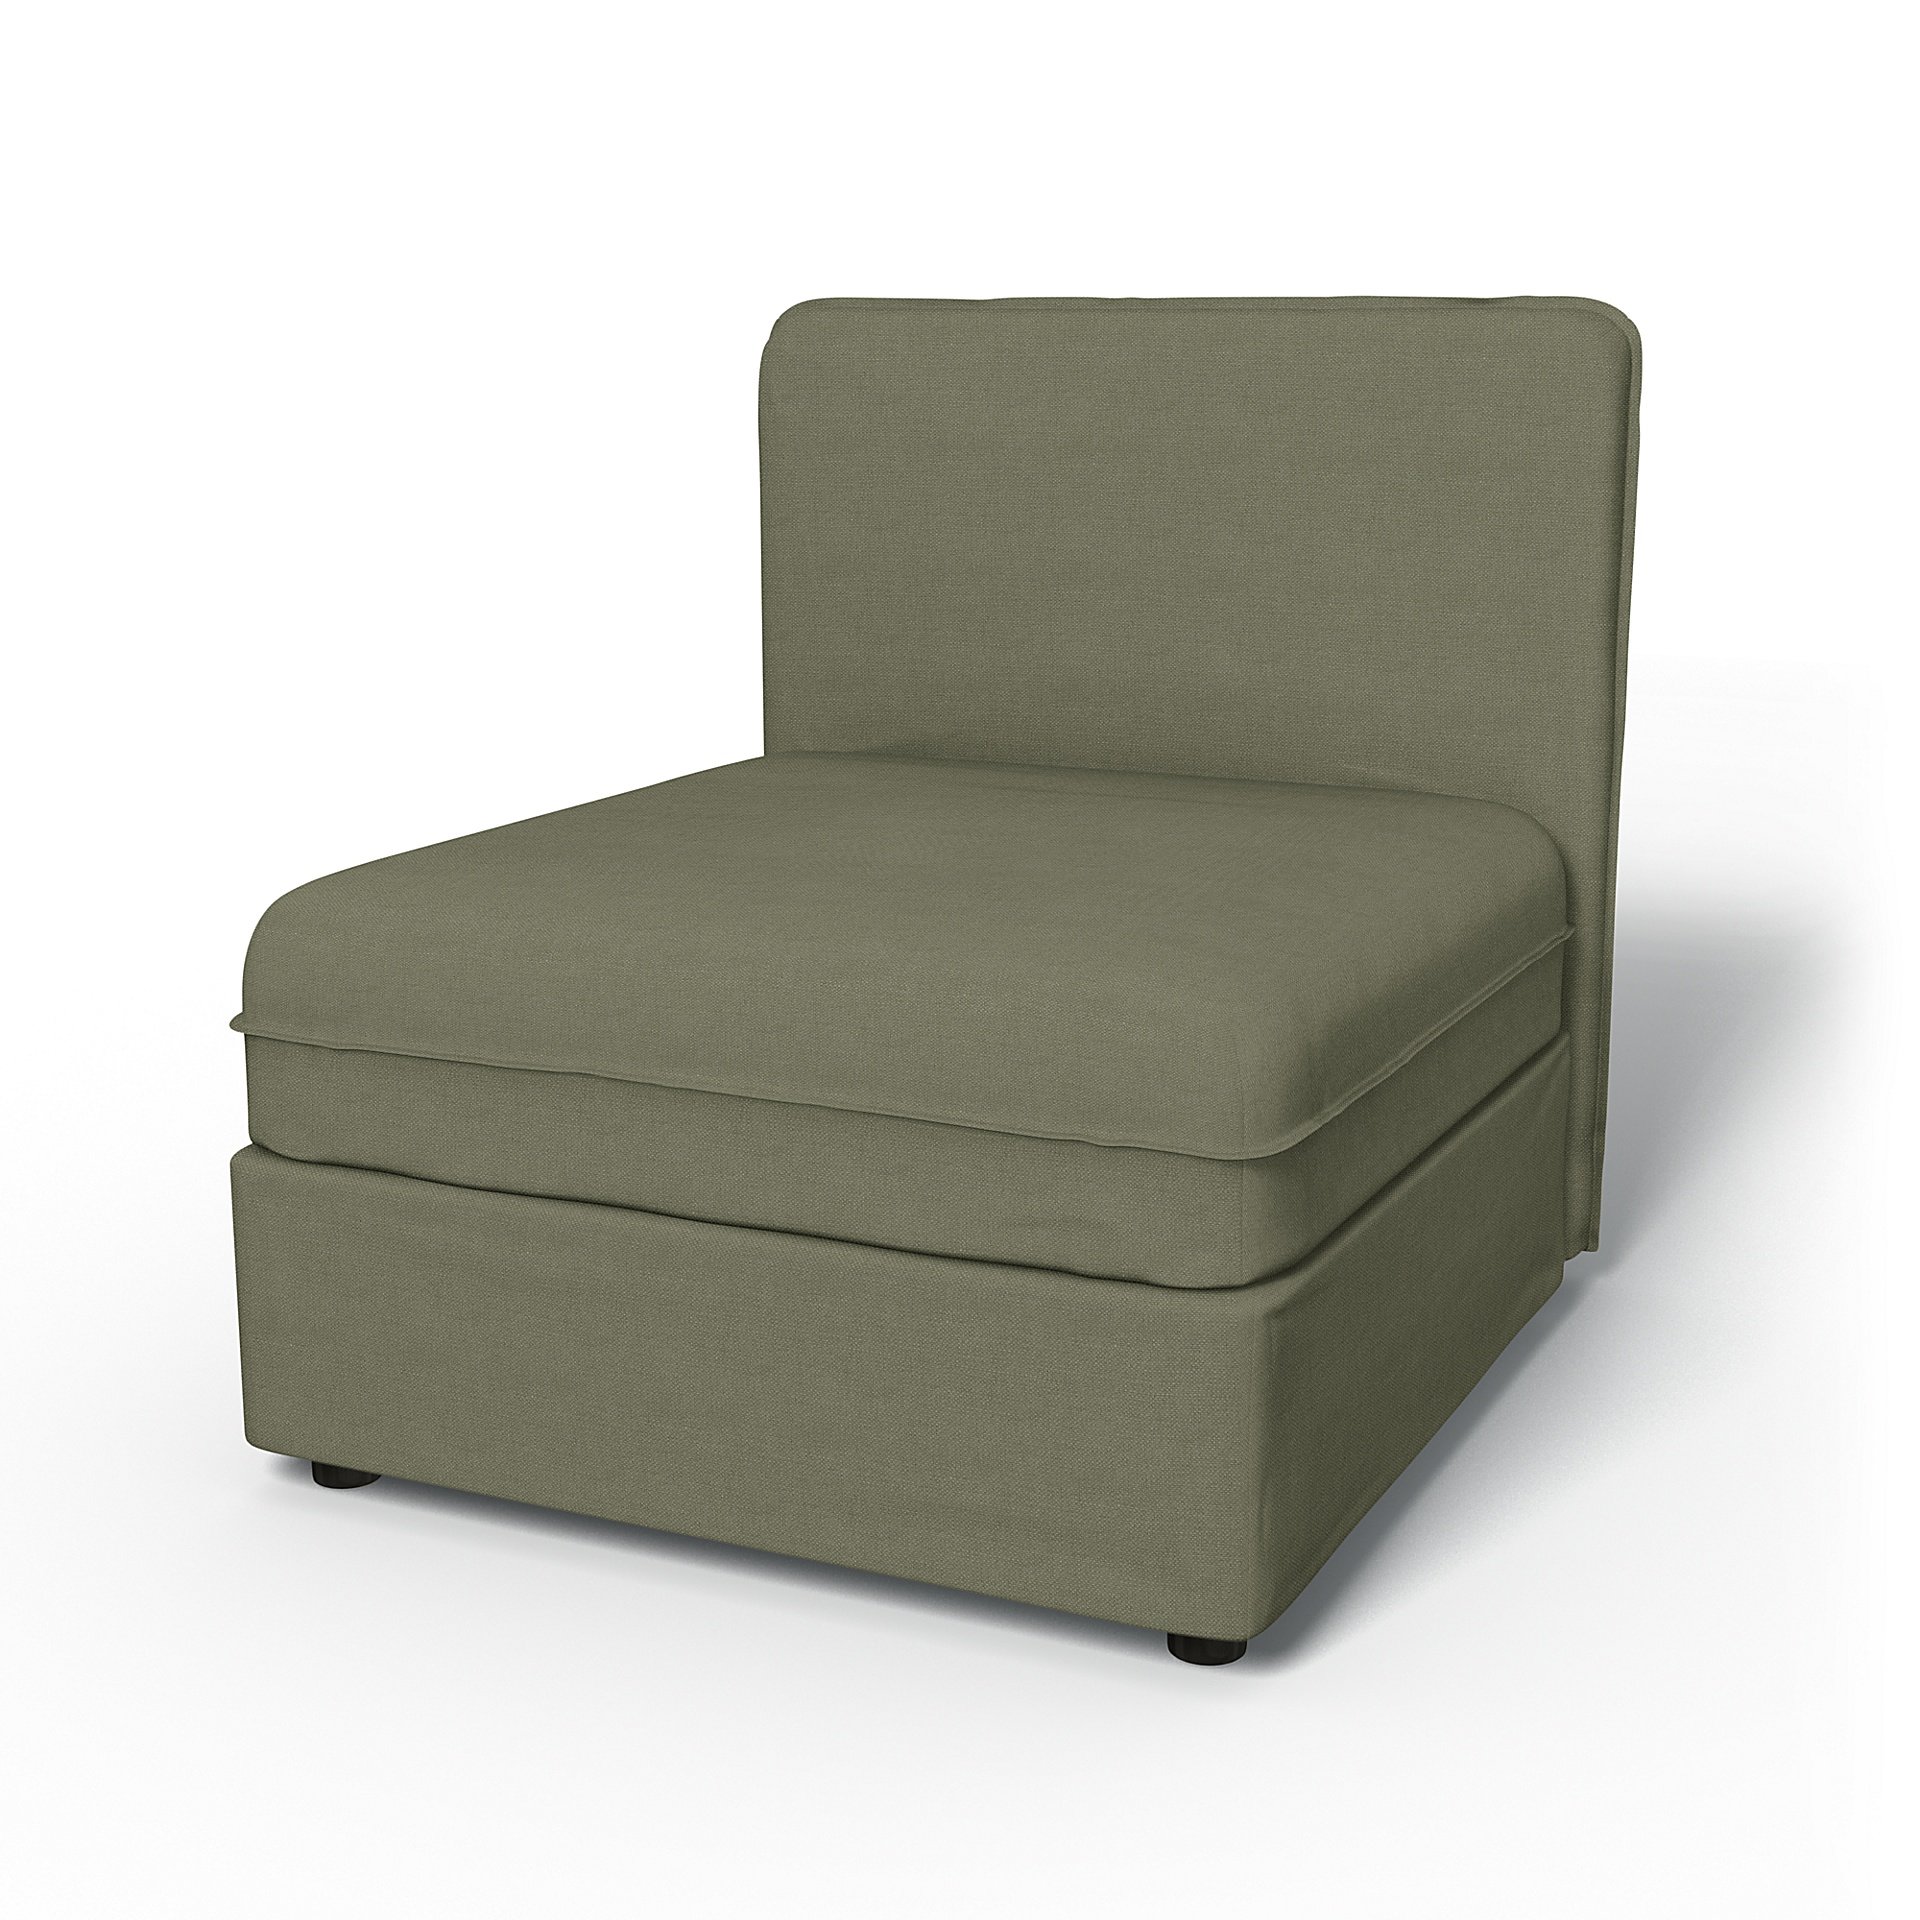 IKEA - Vallentuna Seat Module with Low Back Cover 80x80cm 32x32in, Sage, Linen - Bemz